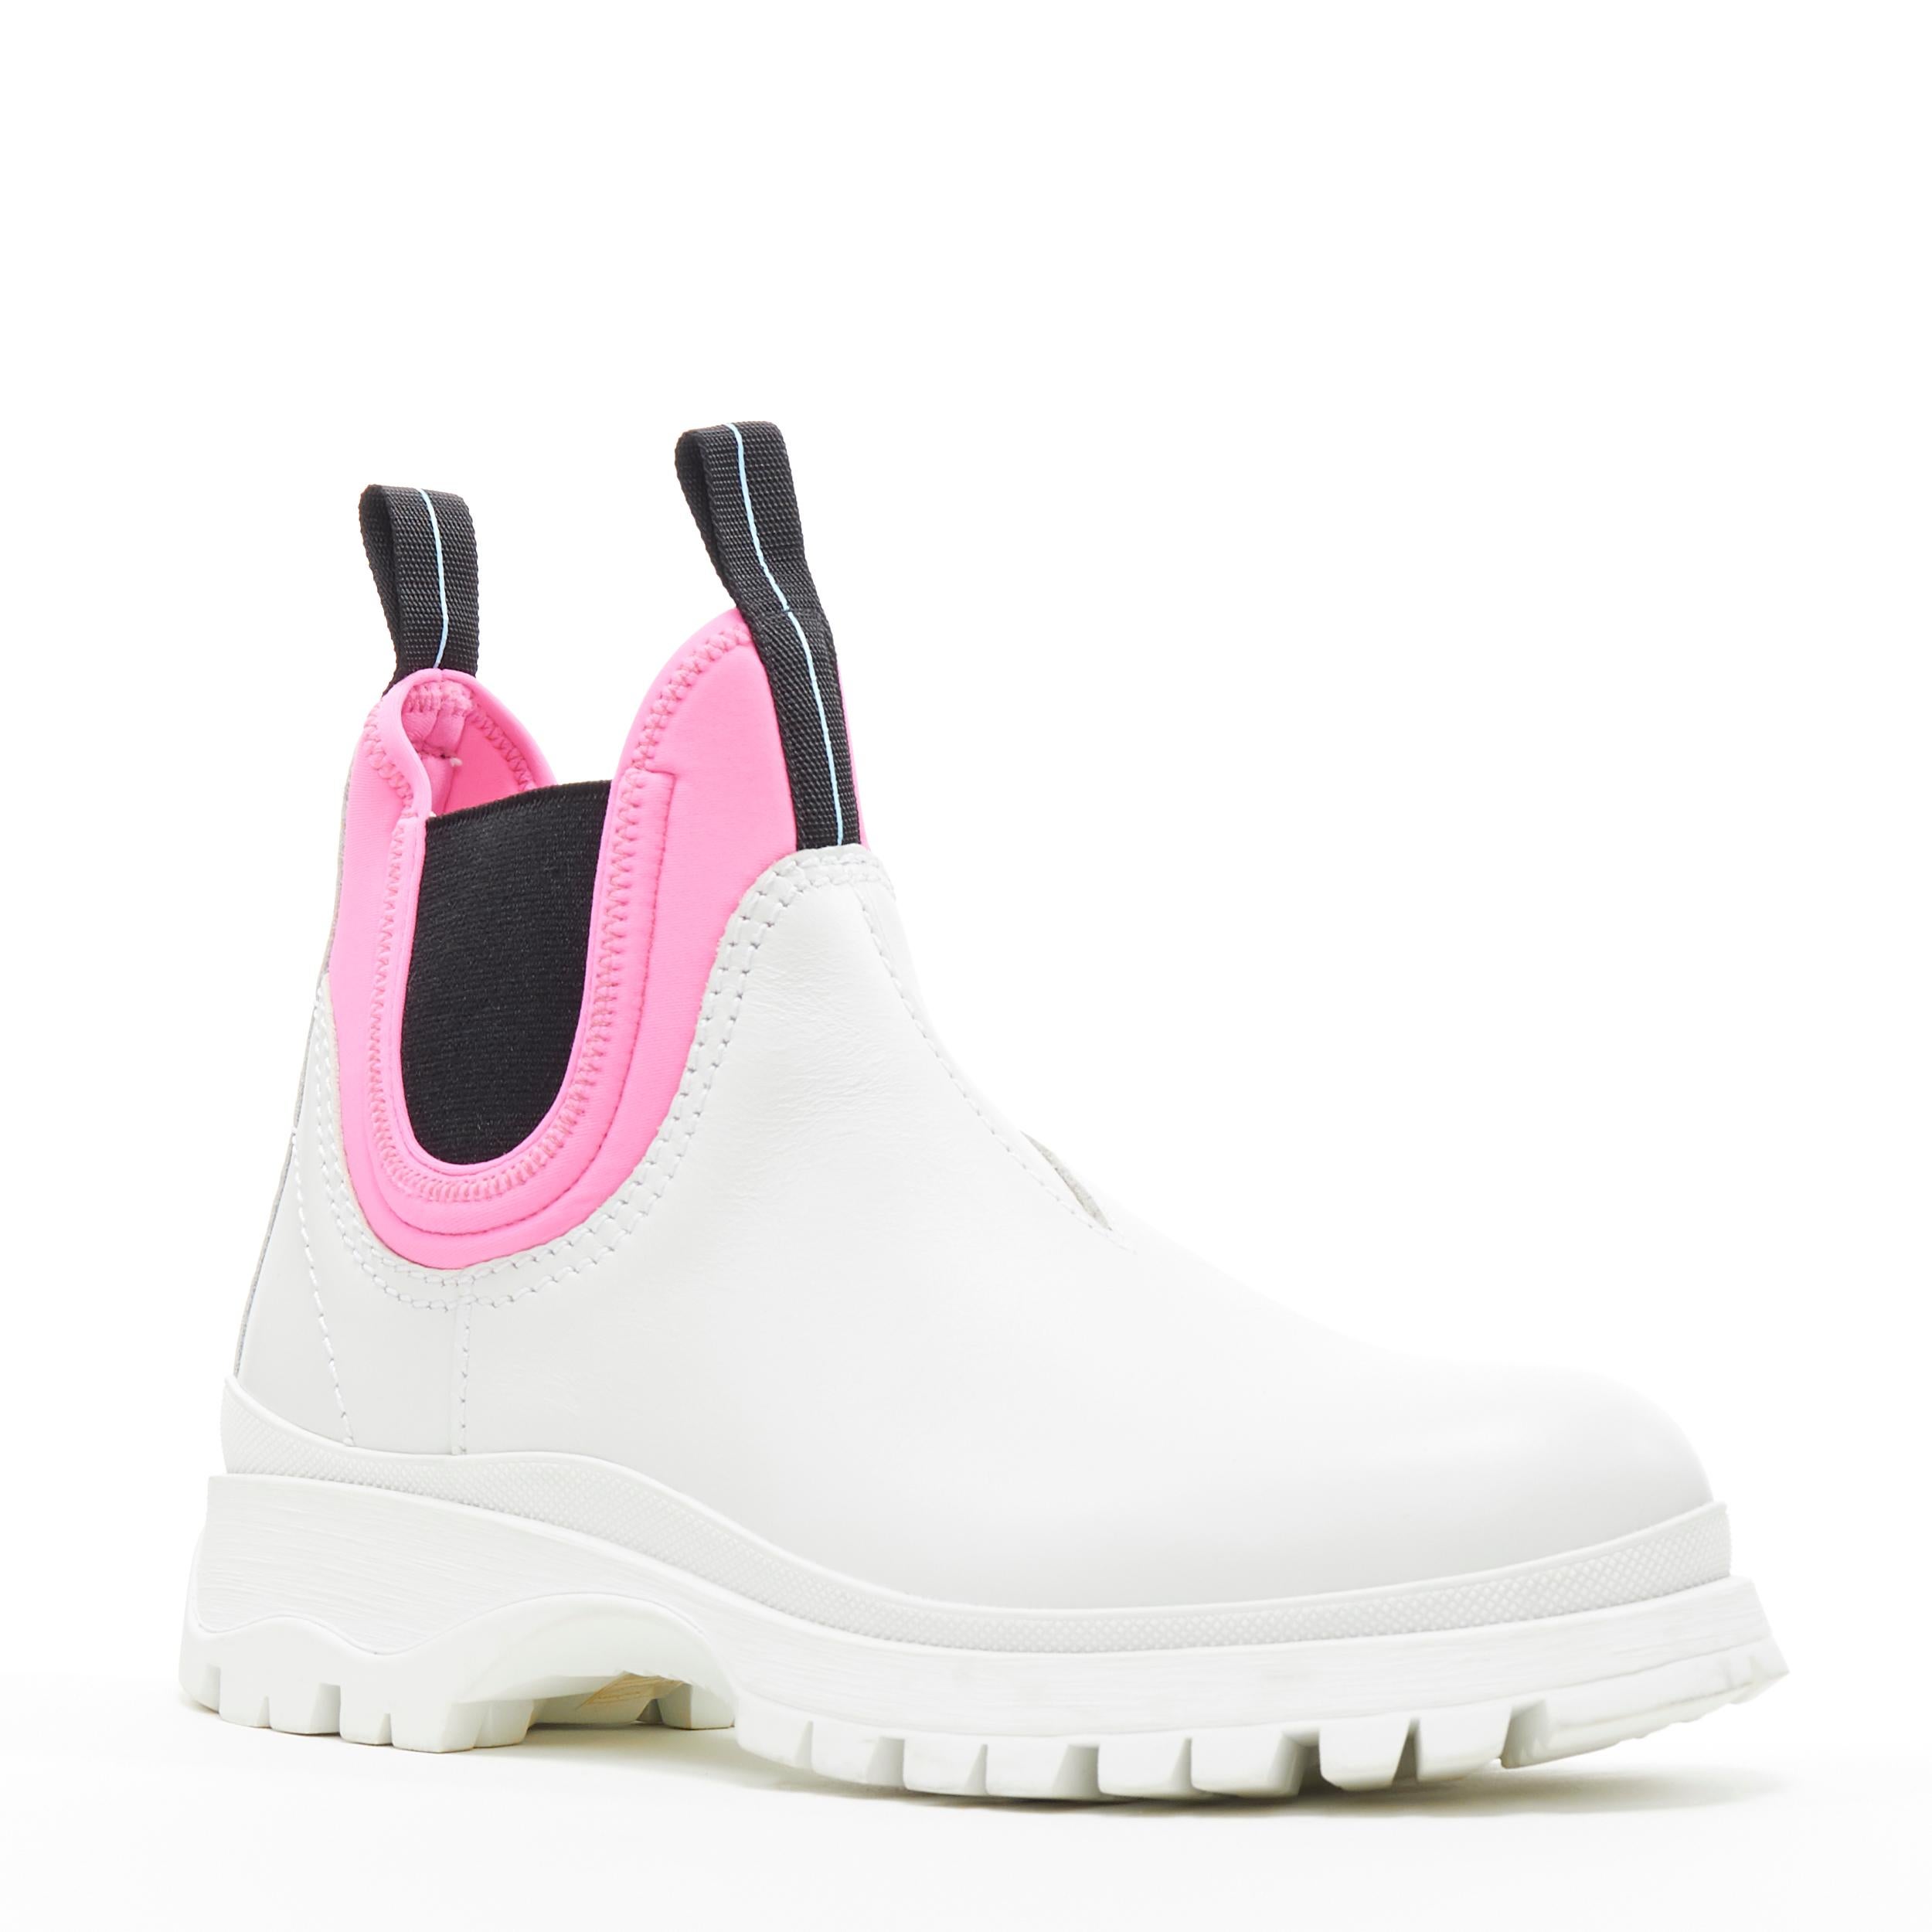 new PRADA 2018 Runway neon pink neoprene white leather ankle chelsea boot EU38.5
Brand: Prada
Designer: Miuccia Prada
Collection: AW2018
Model Name / Style: Neoprene boots
Material: Leather, neoprene
Color: White, pink
Pattern: Solid
Extra Detail: